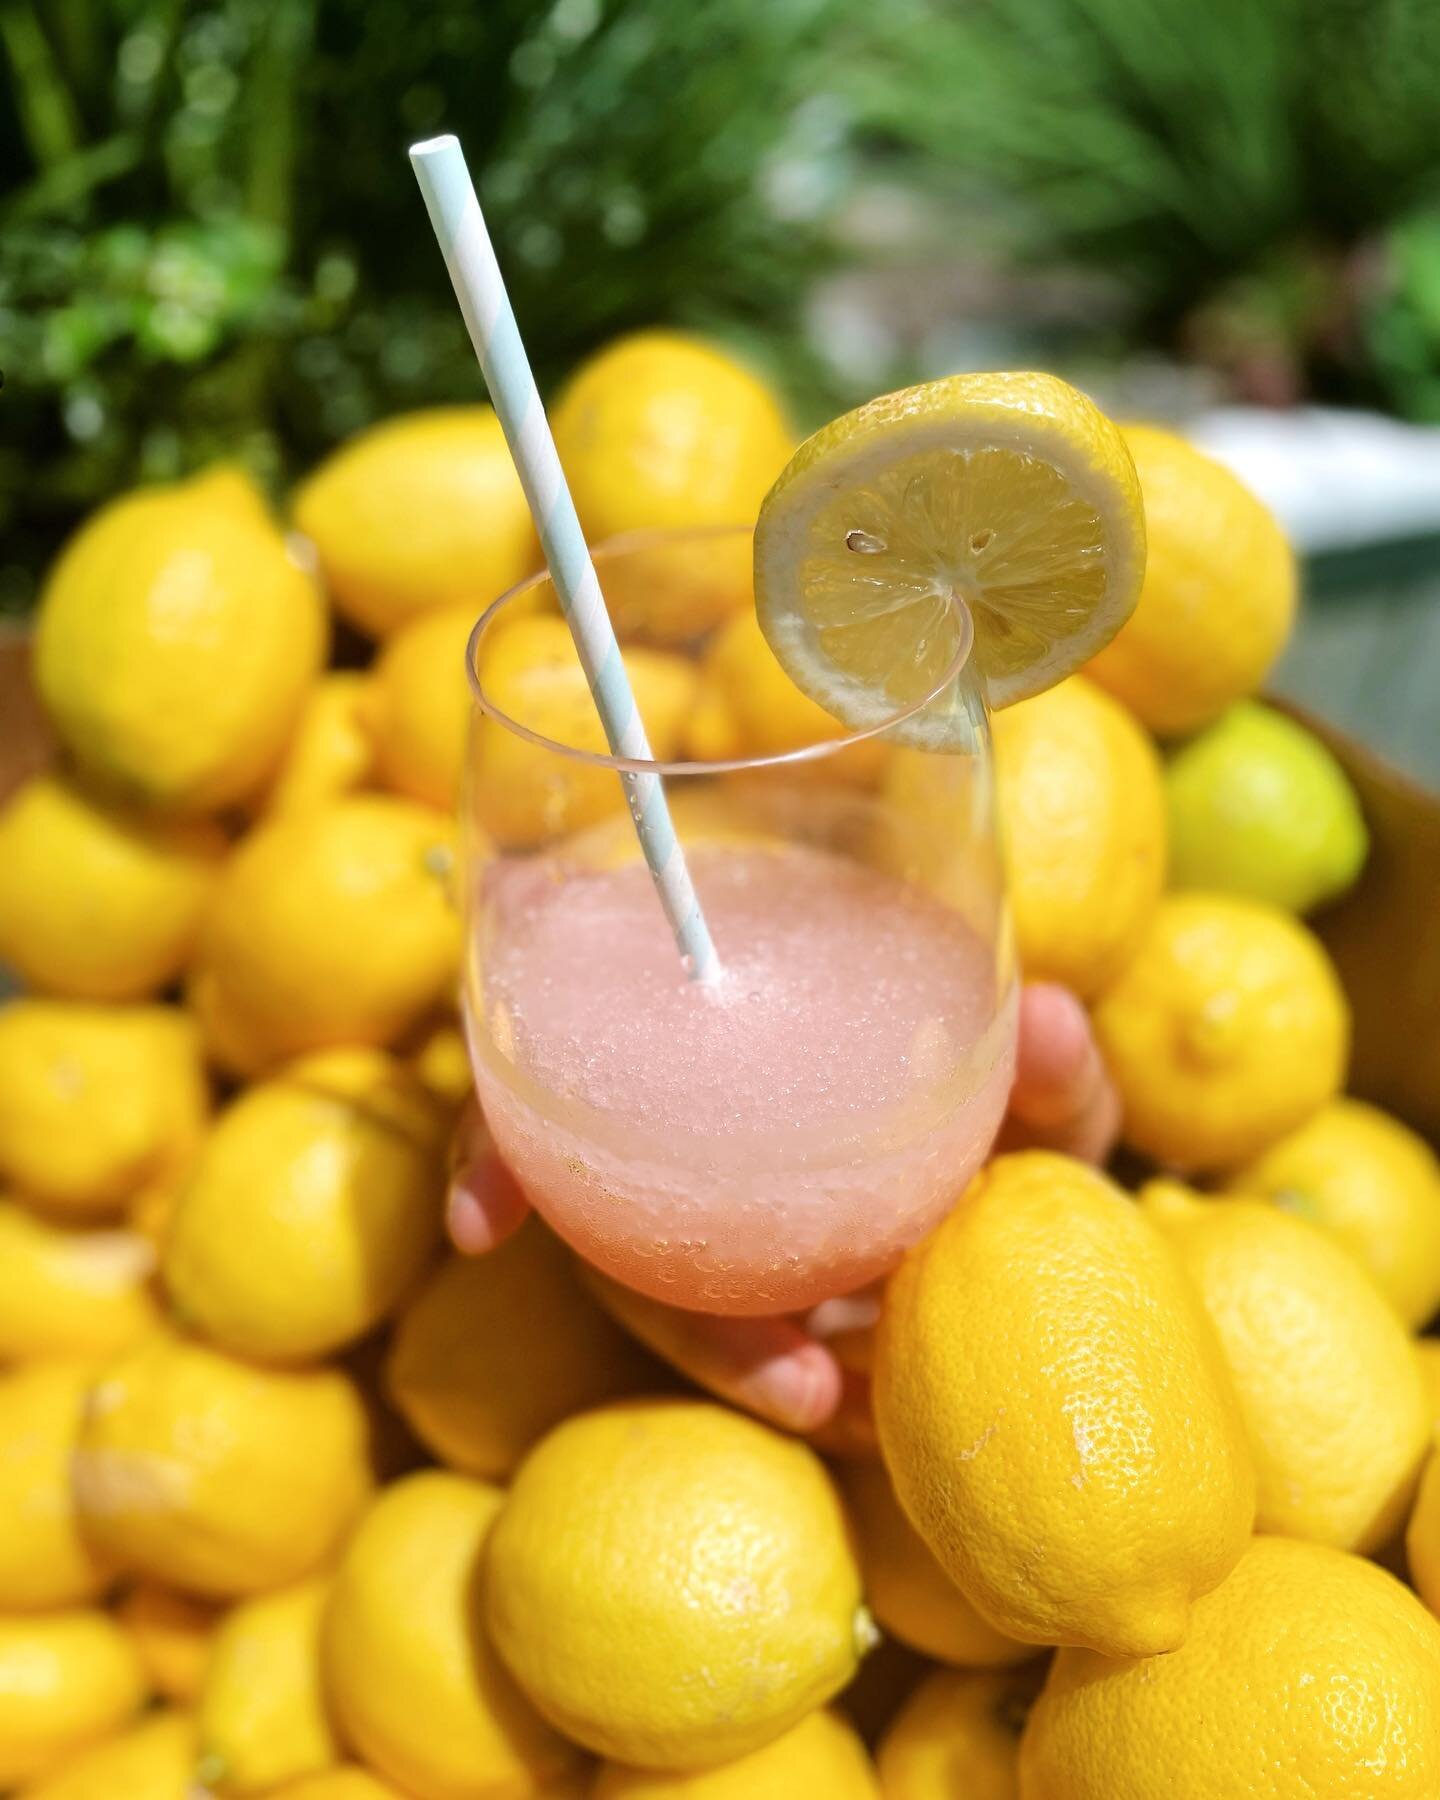 Easy peasy lemon squeezy! 🍋 pink lemonade &amp; @organikavodka makes for a dreamy summer slushy!